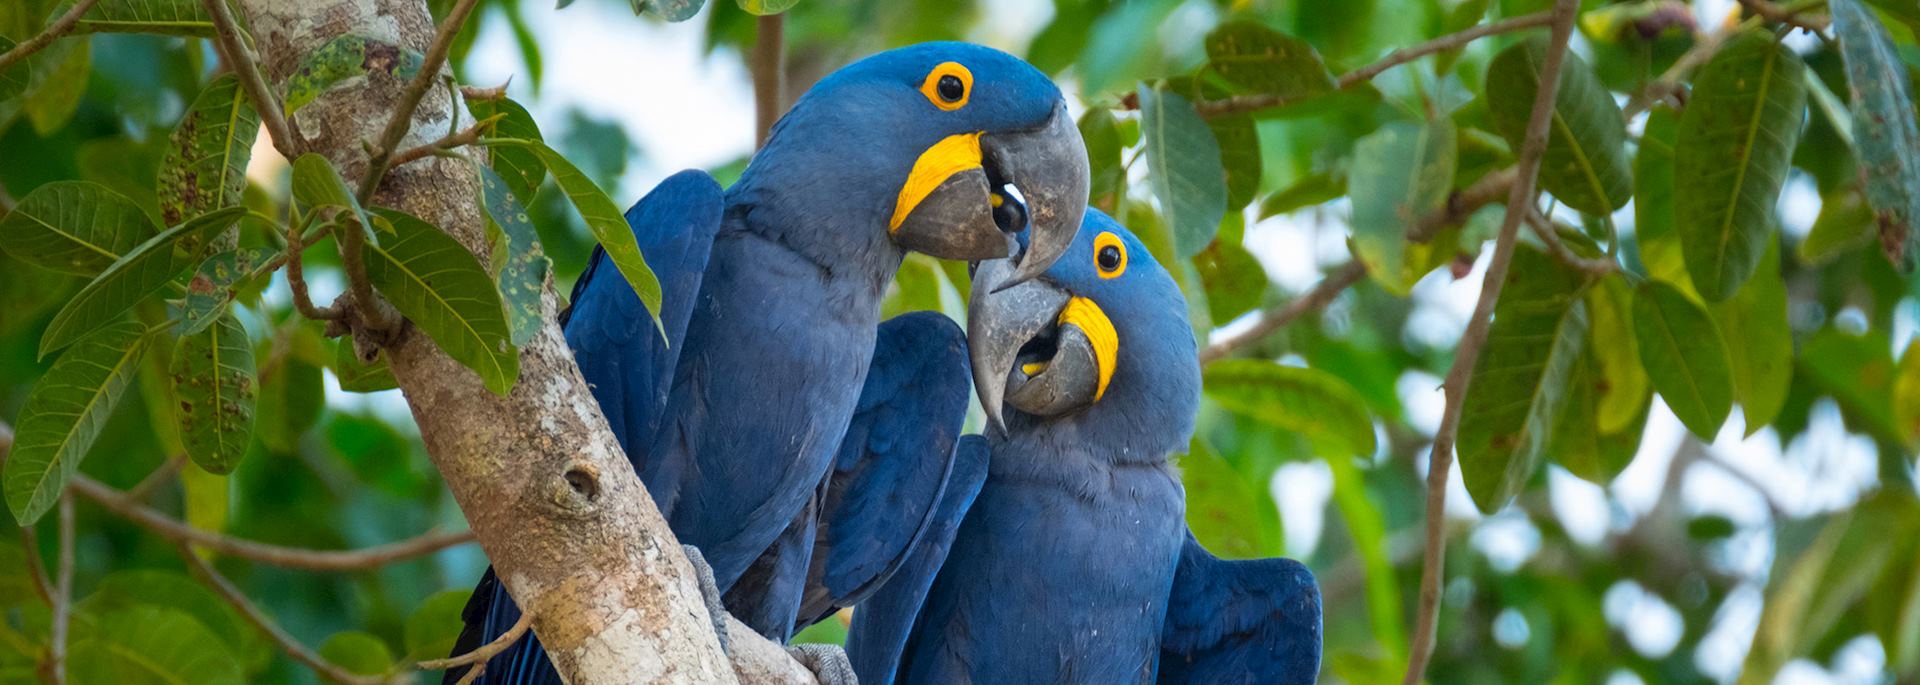 Hyacinth macaws, the Pantanal, Brazil